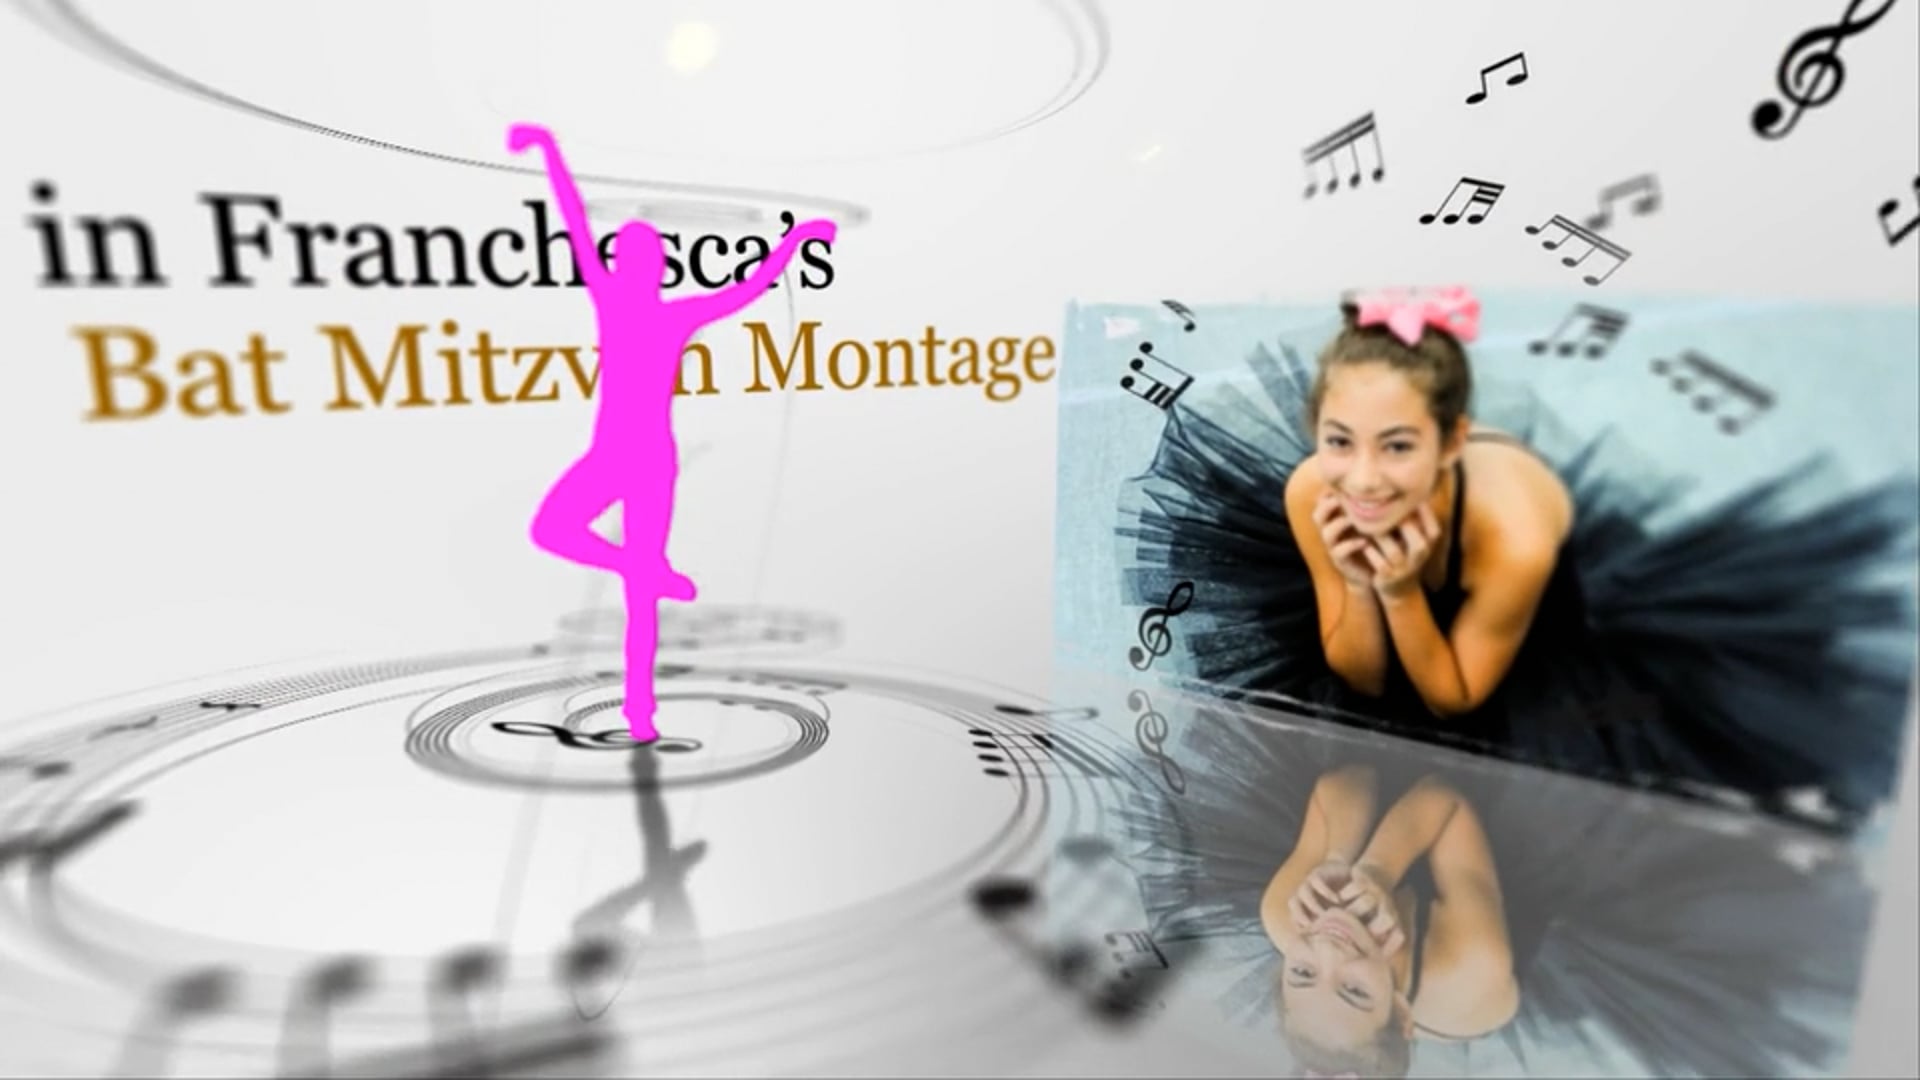 Franchesca's Bat Mitzvah Montage